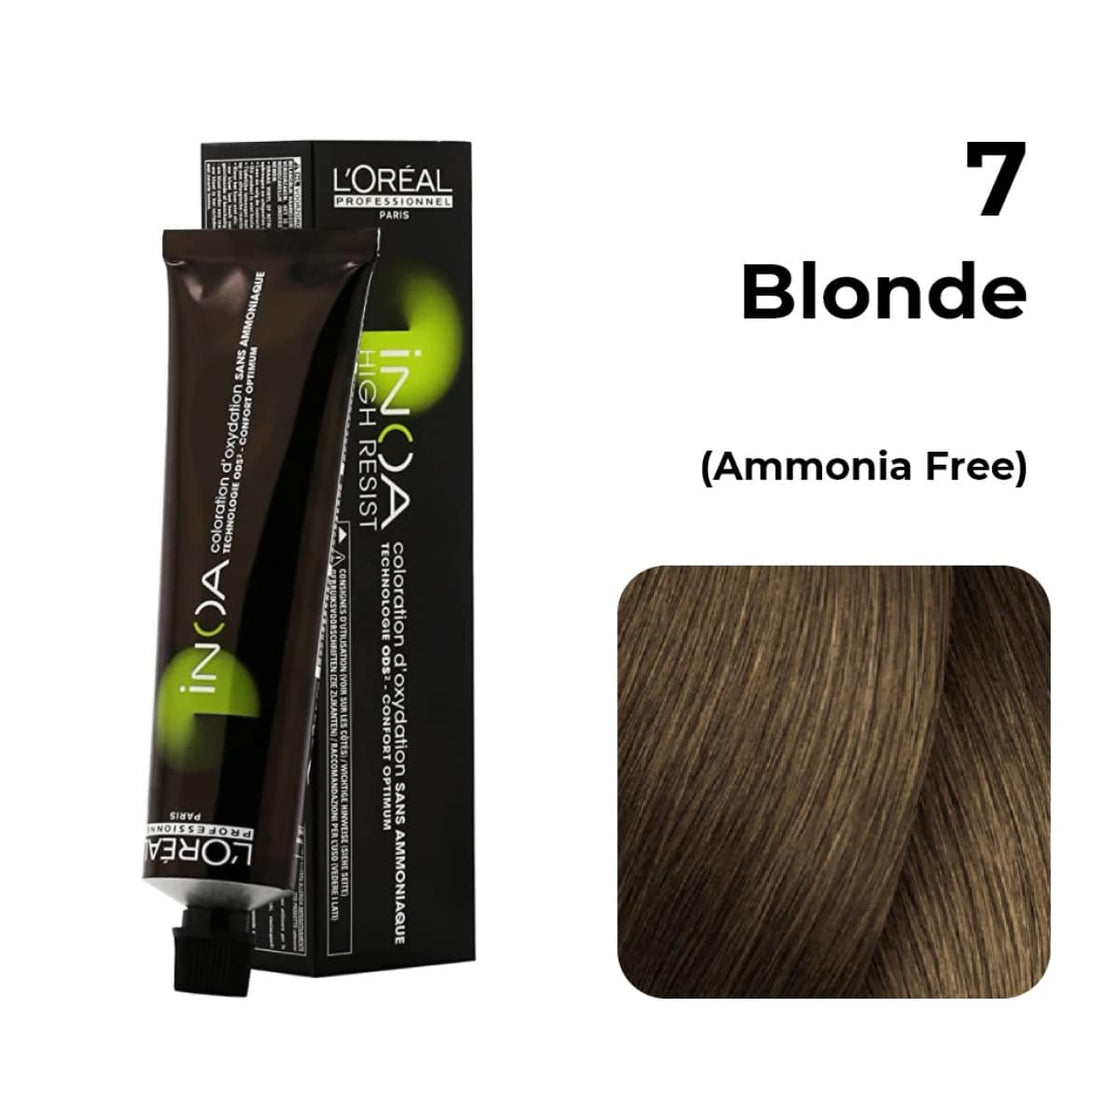 Loreal Inoa Ammonia Free Hair Color 7 Blonde 2pcs +Developer And Allure Dye Brush HD-01 Combo